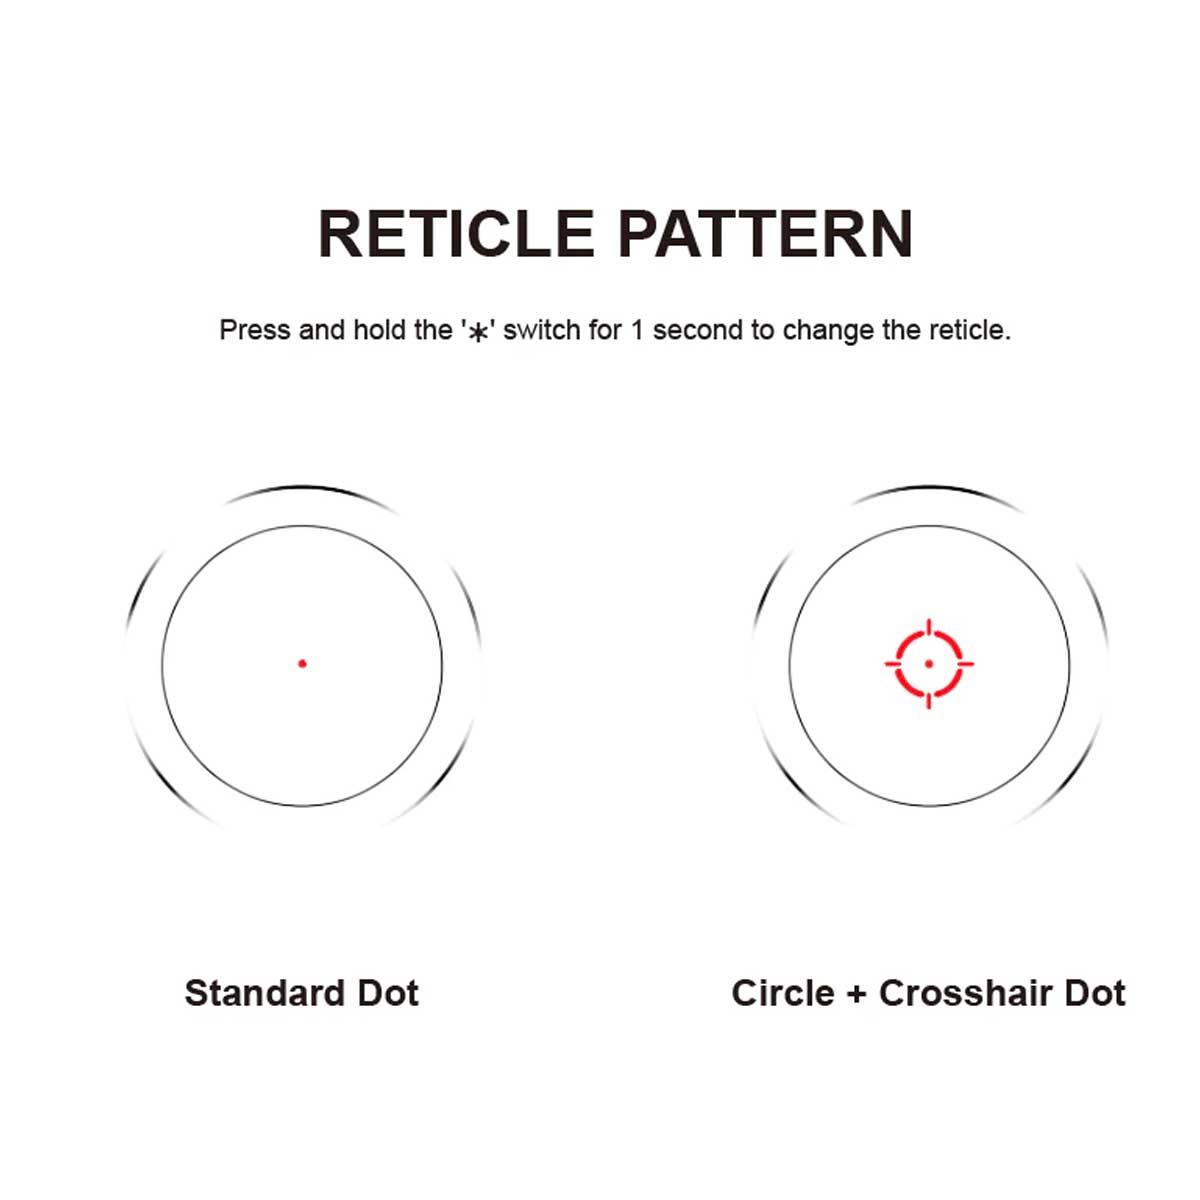 Vector Optics Nautilus 1x30 Red Dot Scope Double Réticule - RedDotSight